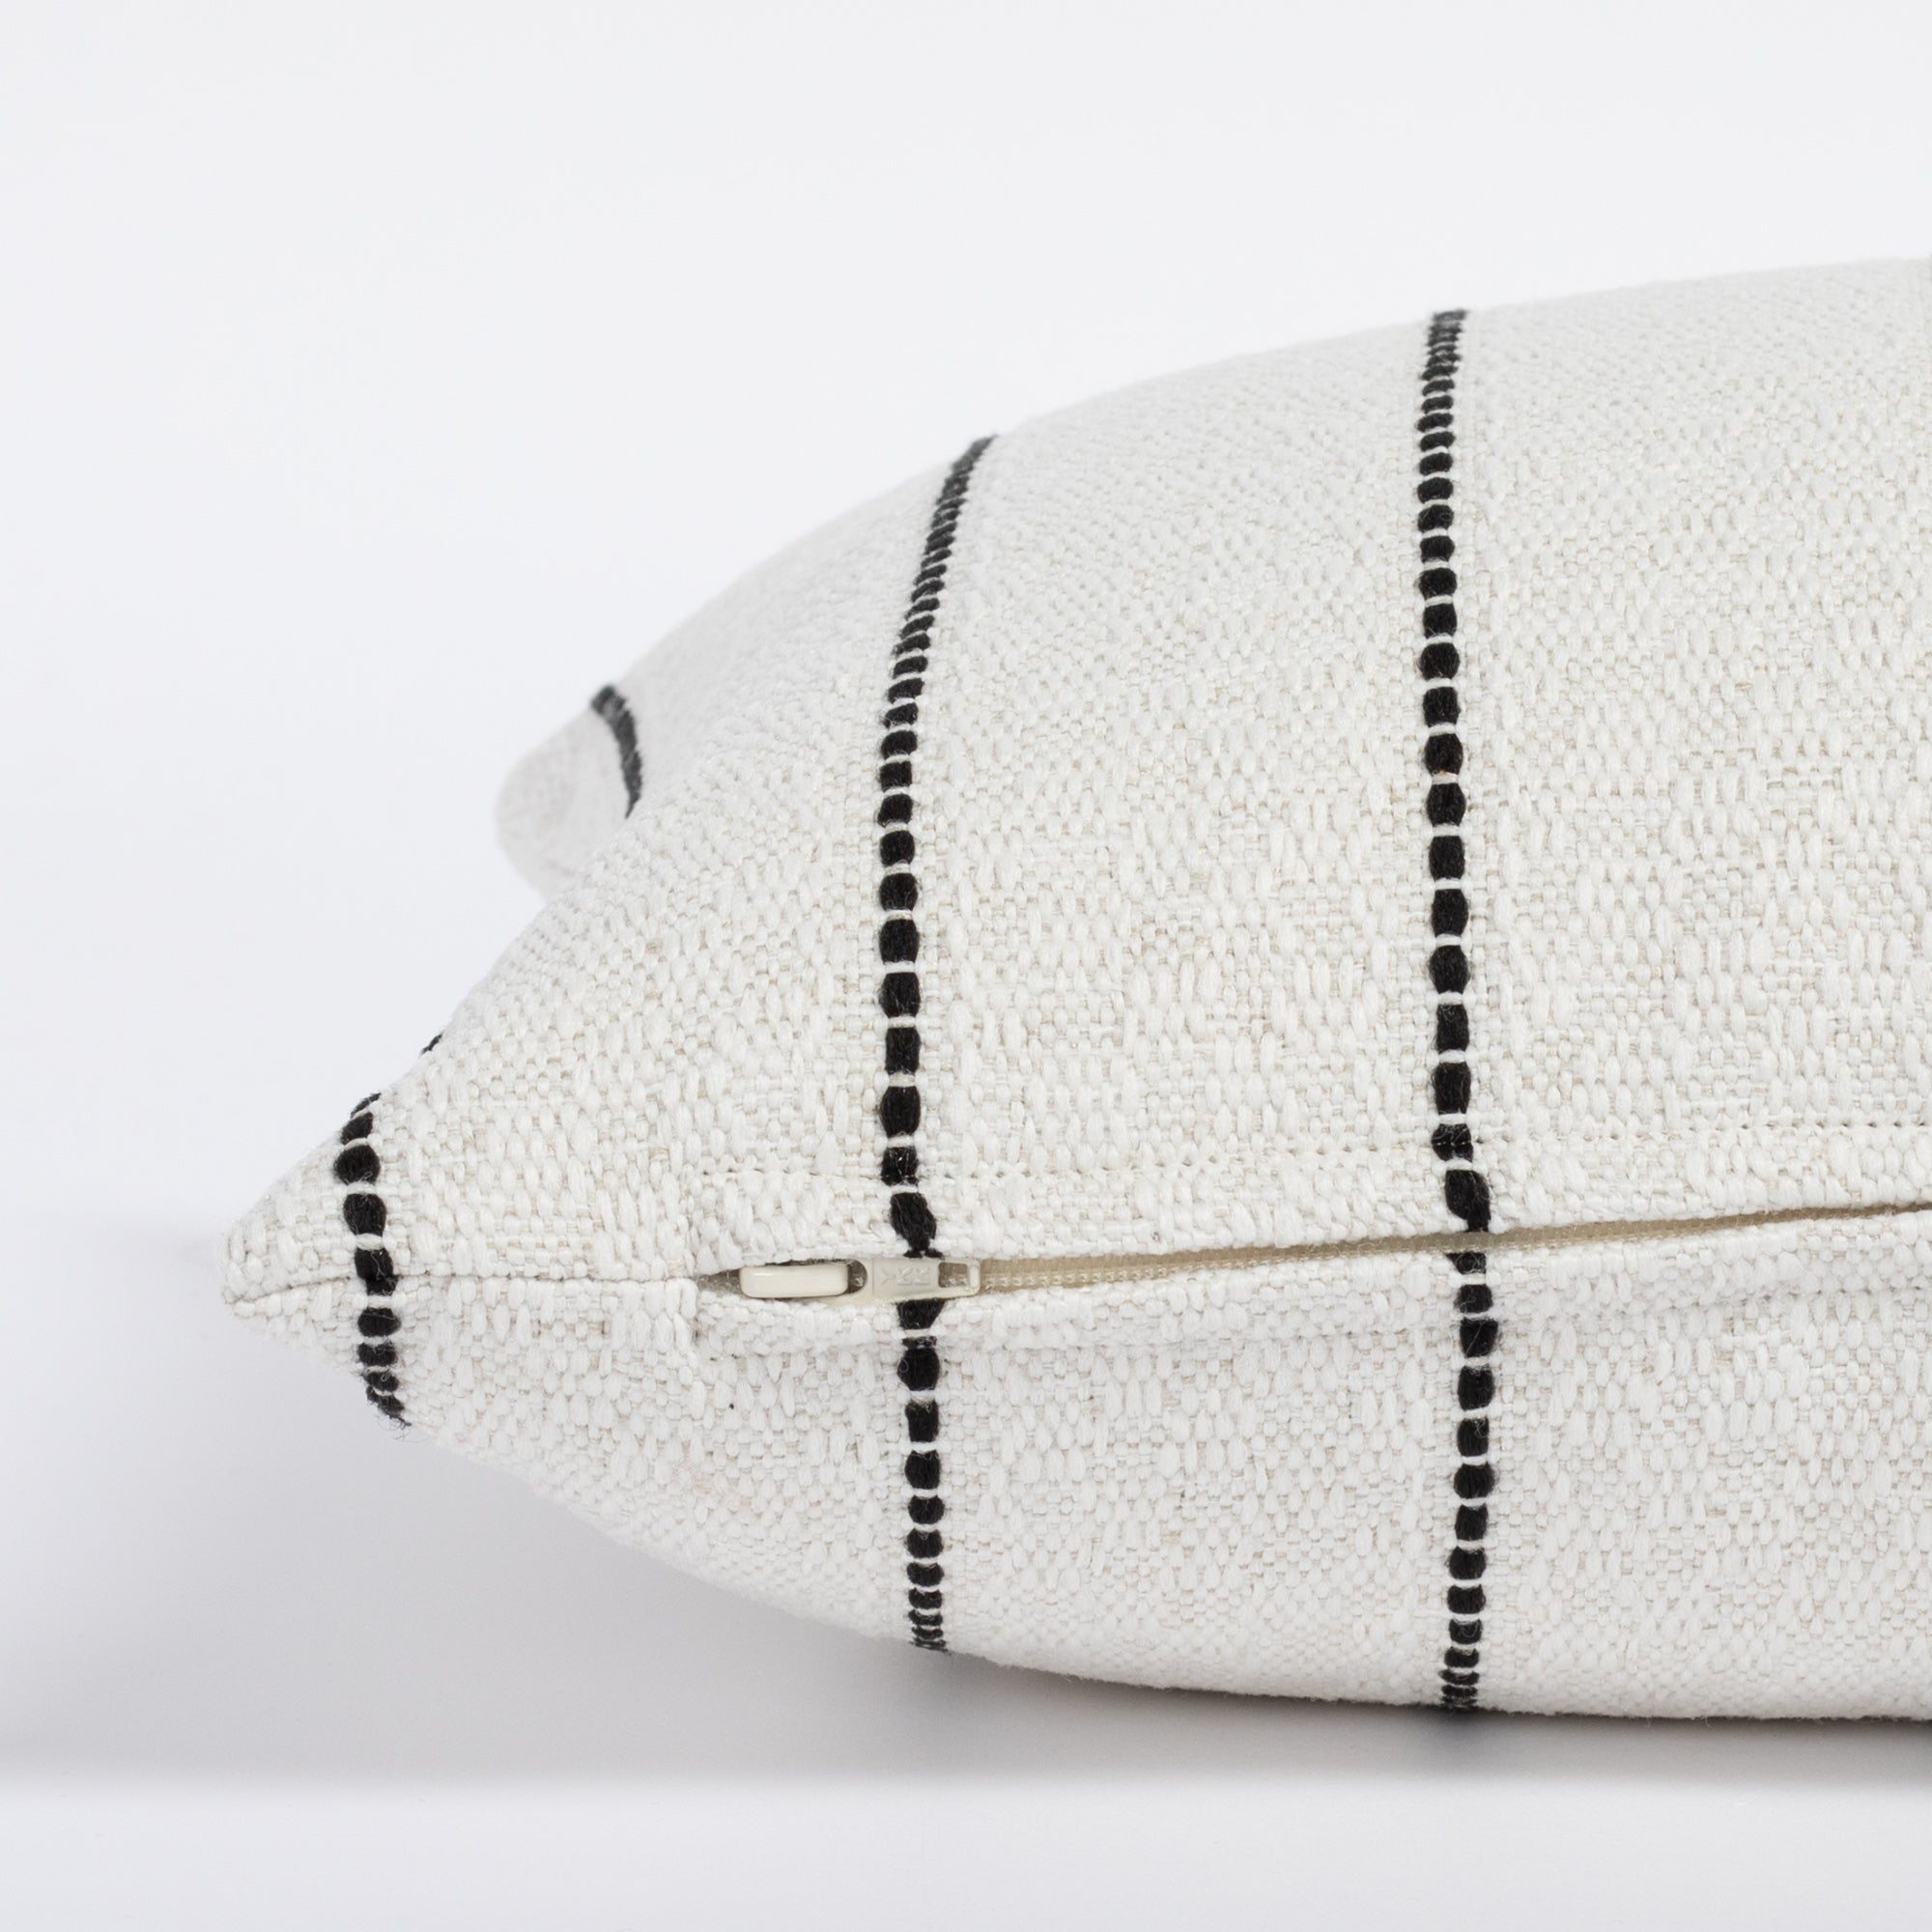 Toulouse Onyx 12x24 Lumbar Pillow, a white with black stripe lumbar pillow : close up zipper side view